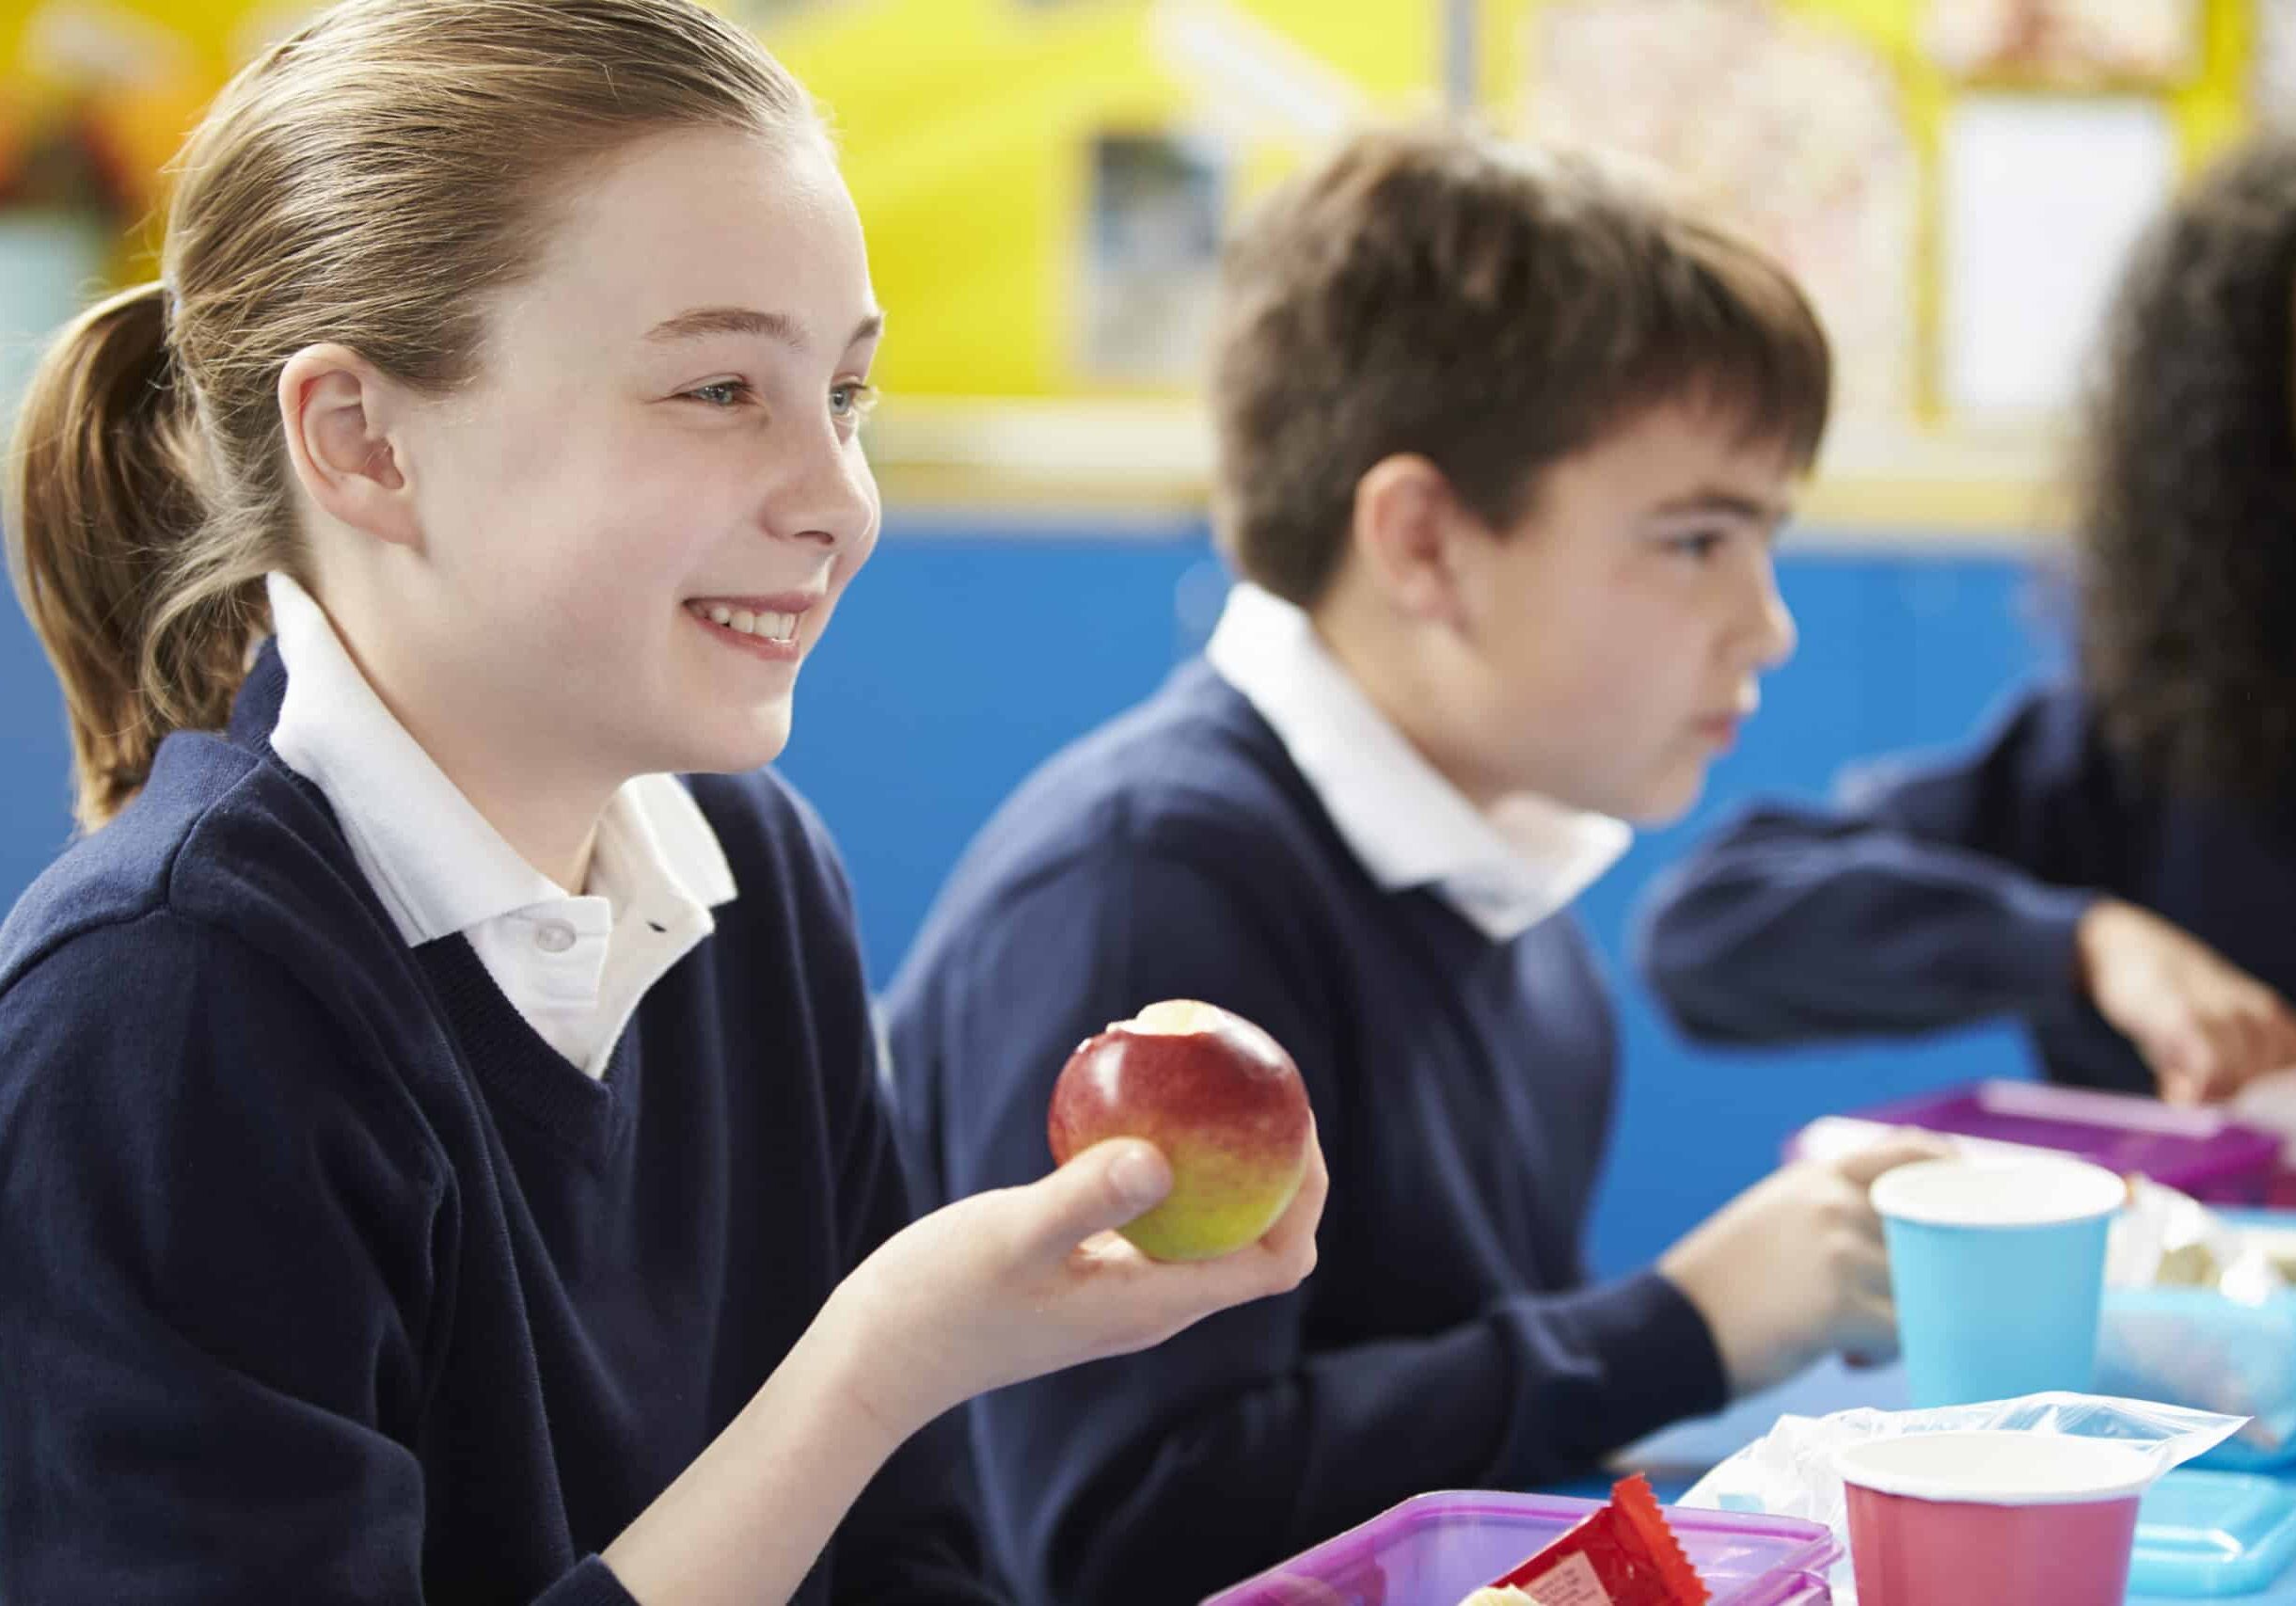 School girl eating apple in a nurture group snack time